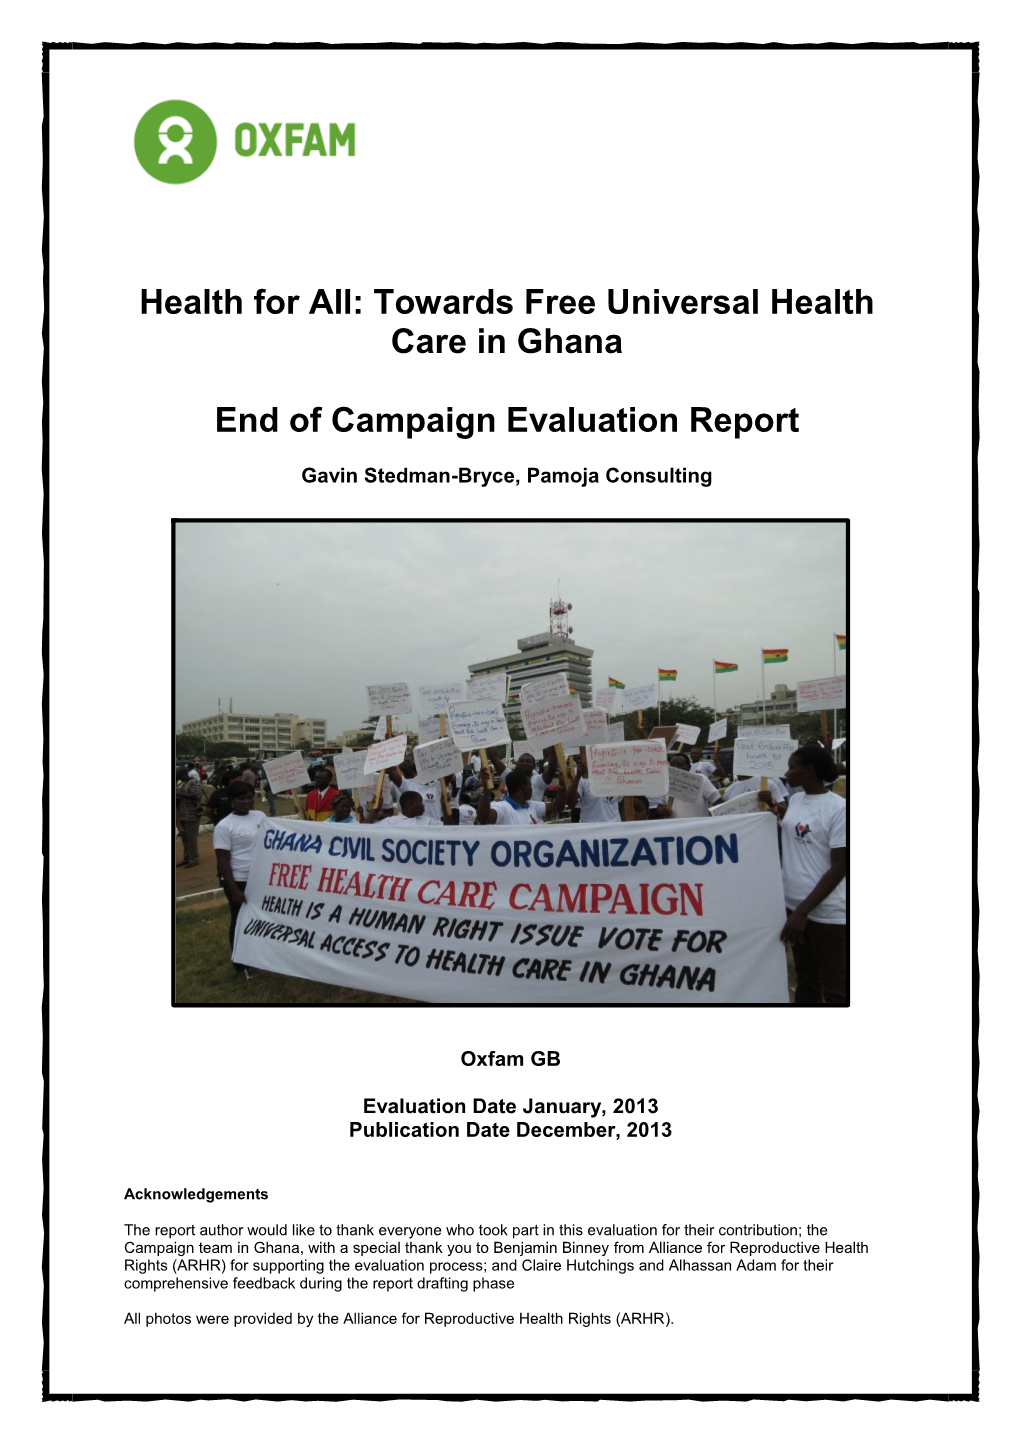 Towards Free Universal Health Care in Ghana